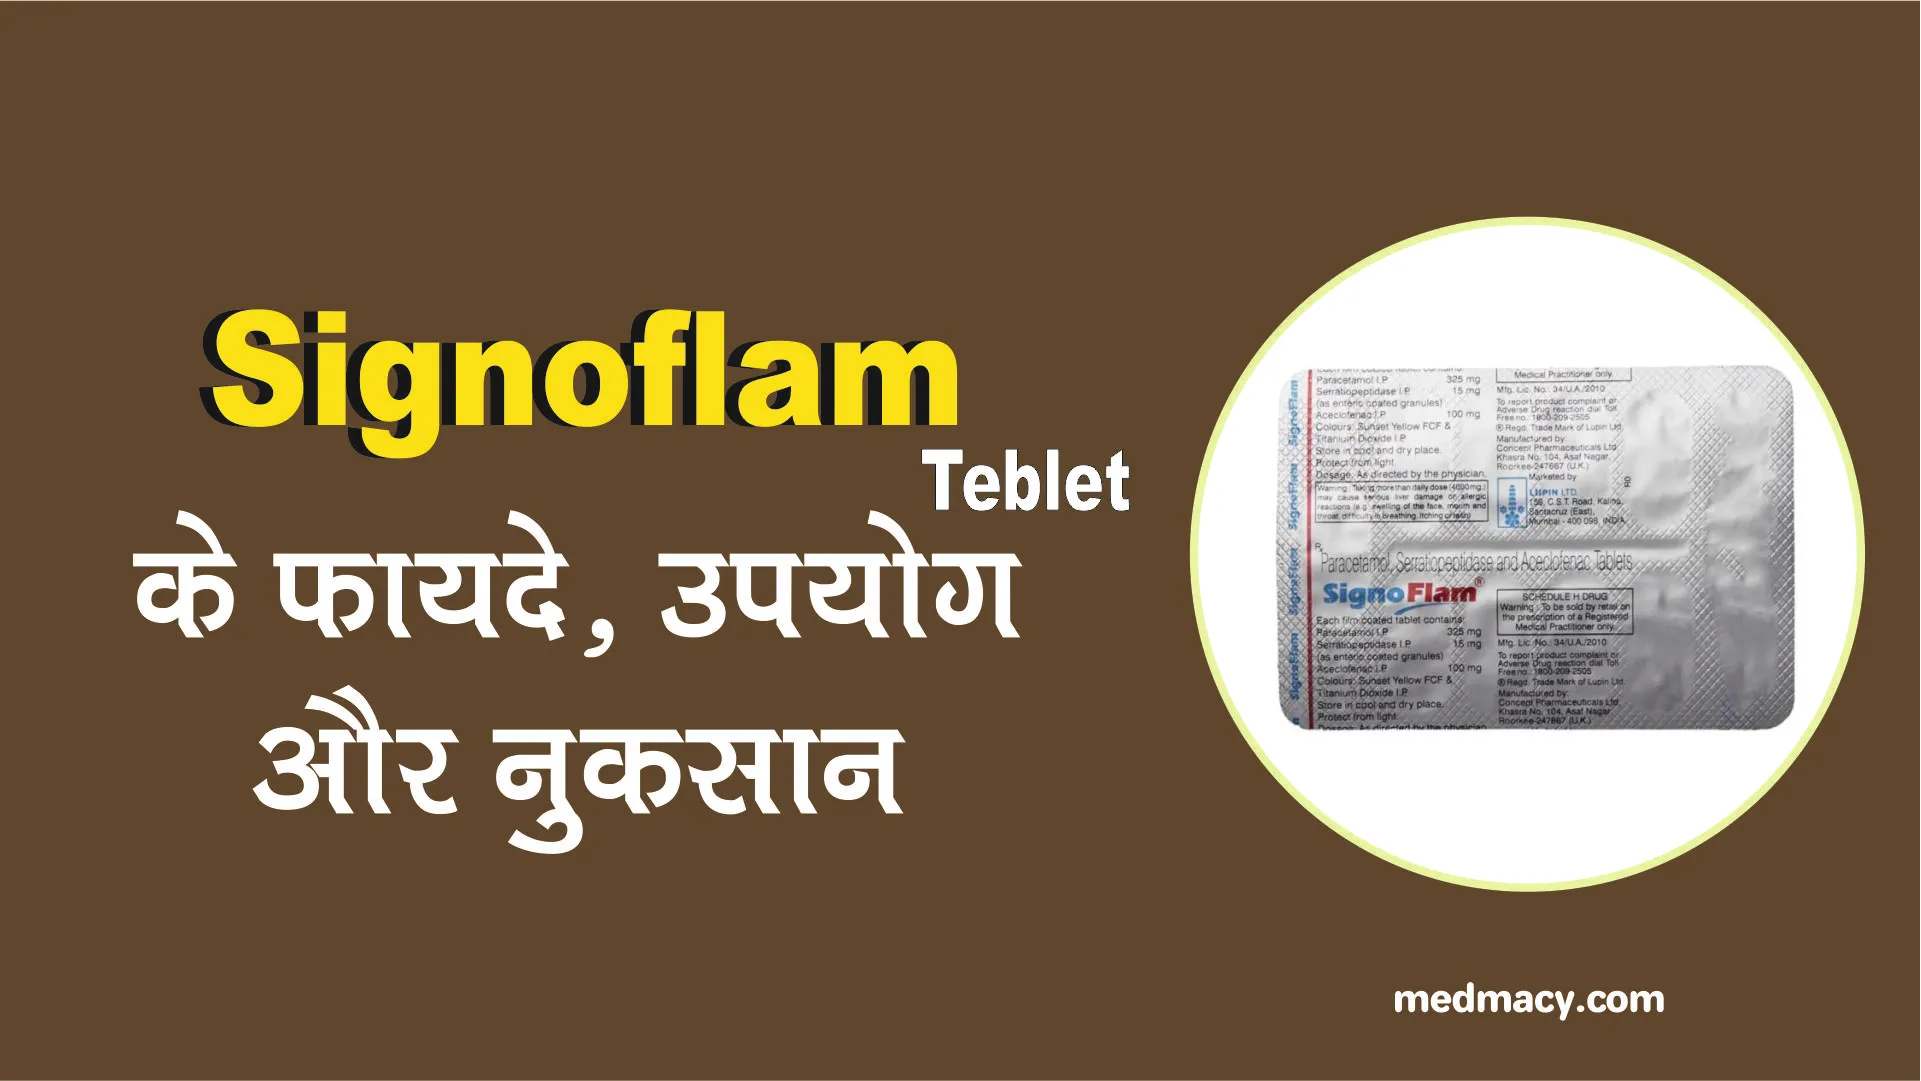 Signoflam Tablet Uses in Hindi